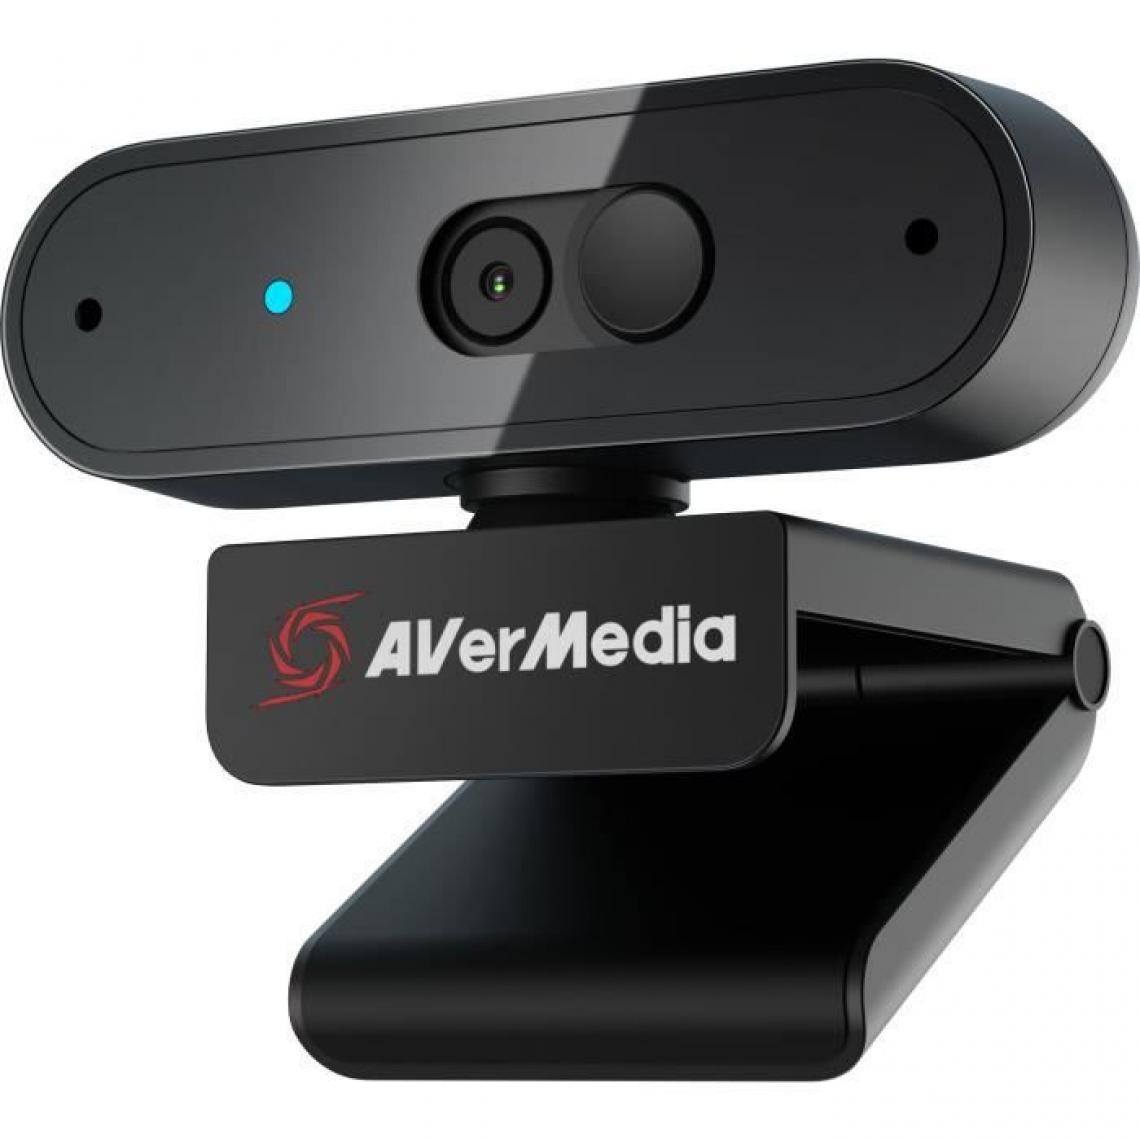 Avermedia - AVerMedia - Streaming - Webcam Full HD 1080p30 PW310P-Autofocus - Webcam